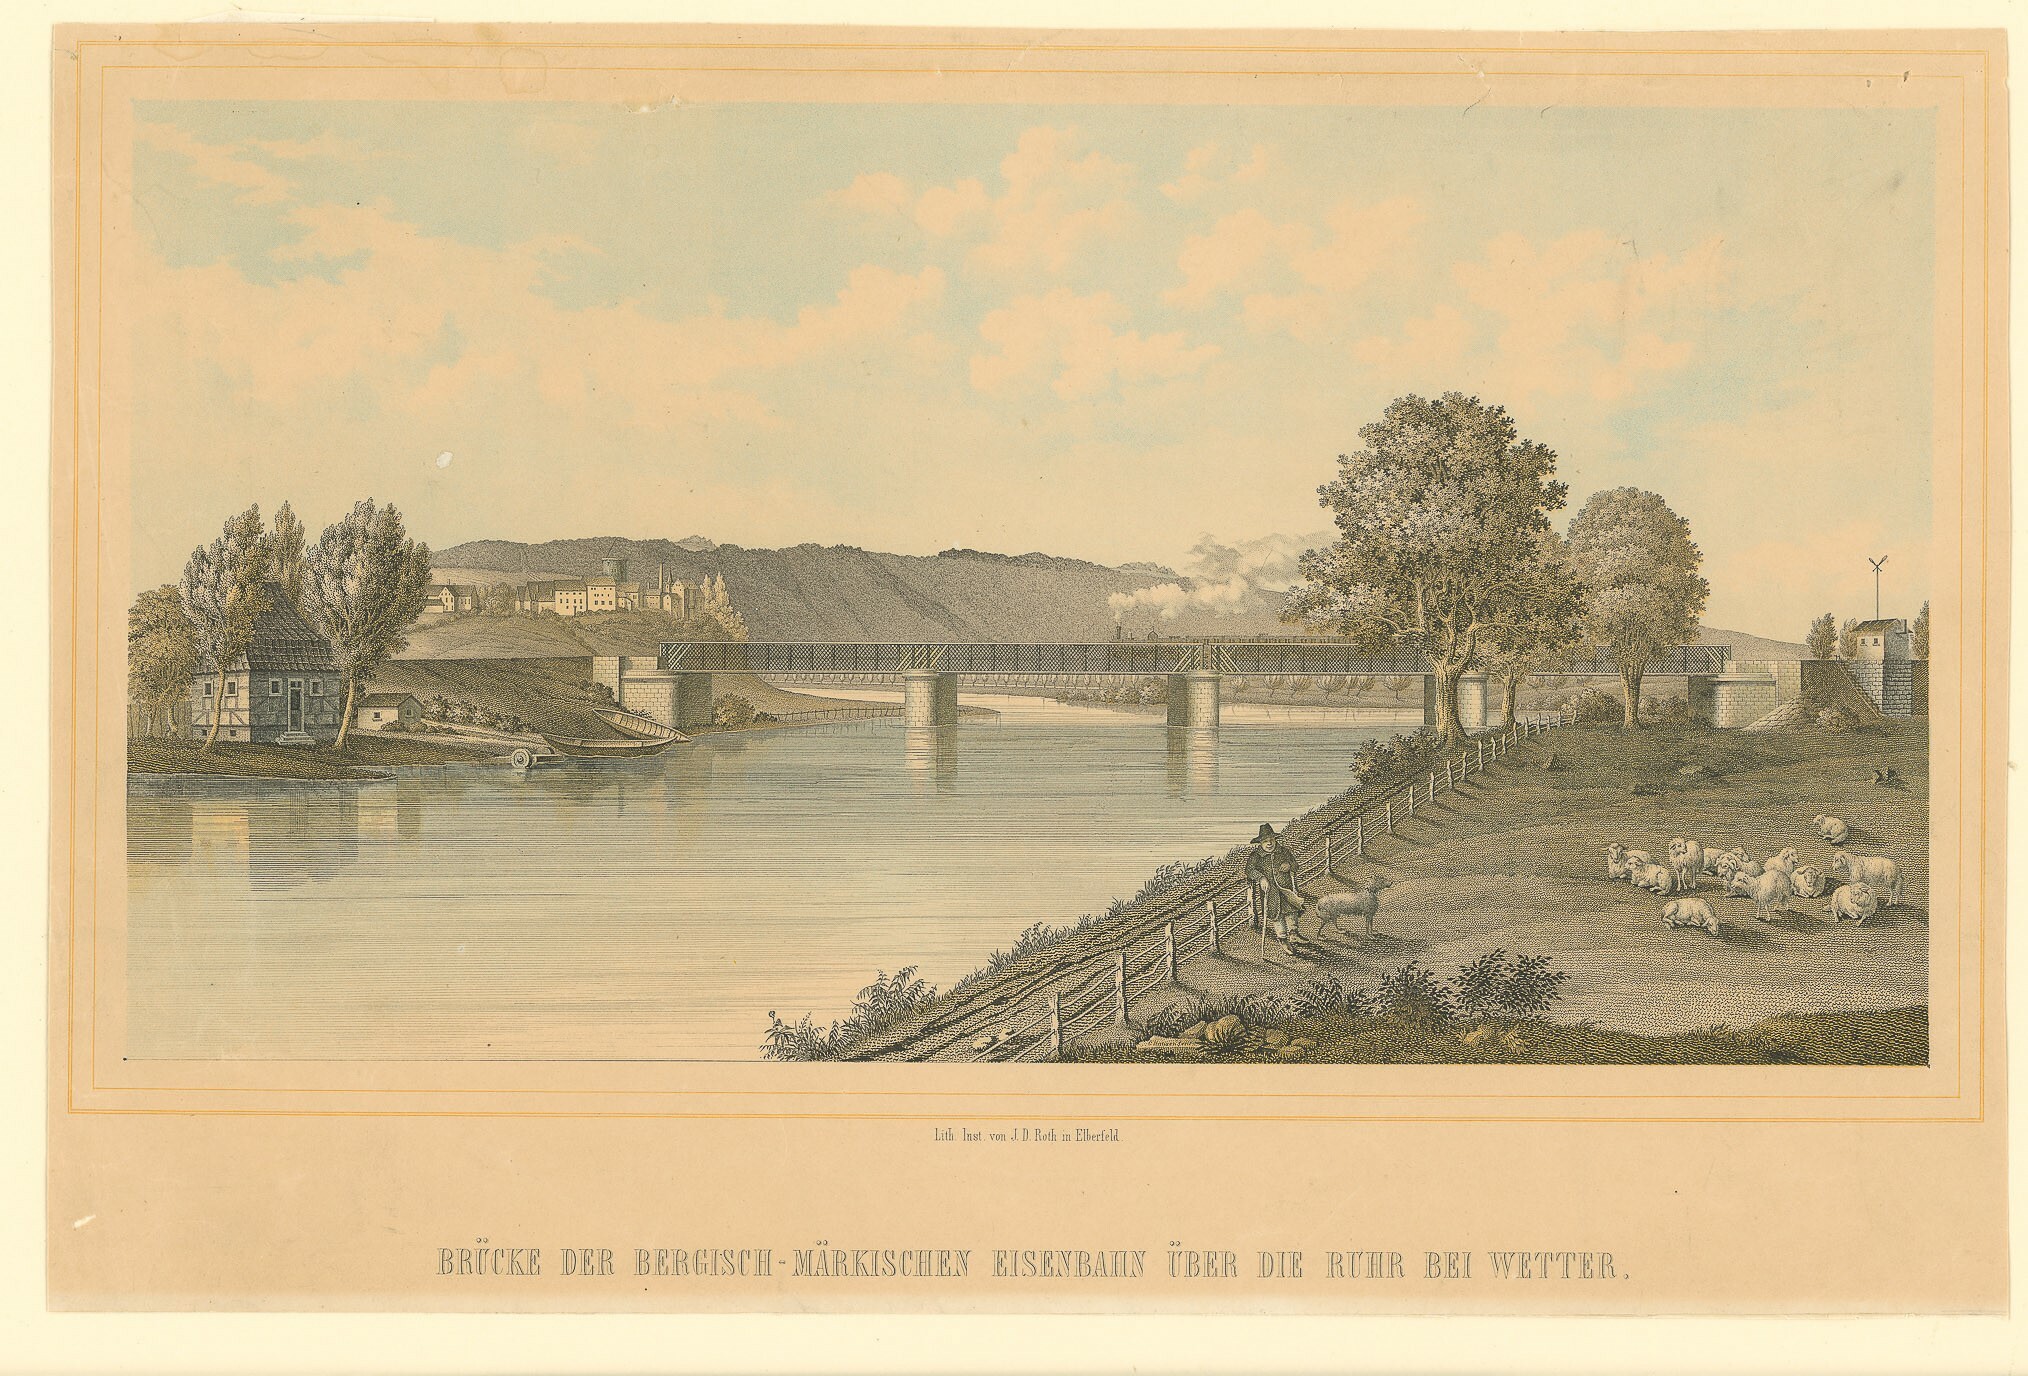 Lithografe mit Ansicht der Ruhrbrücke bei Wetter (Museen Burg Altena CC BY-NC-SA)